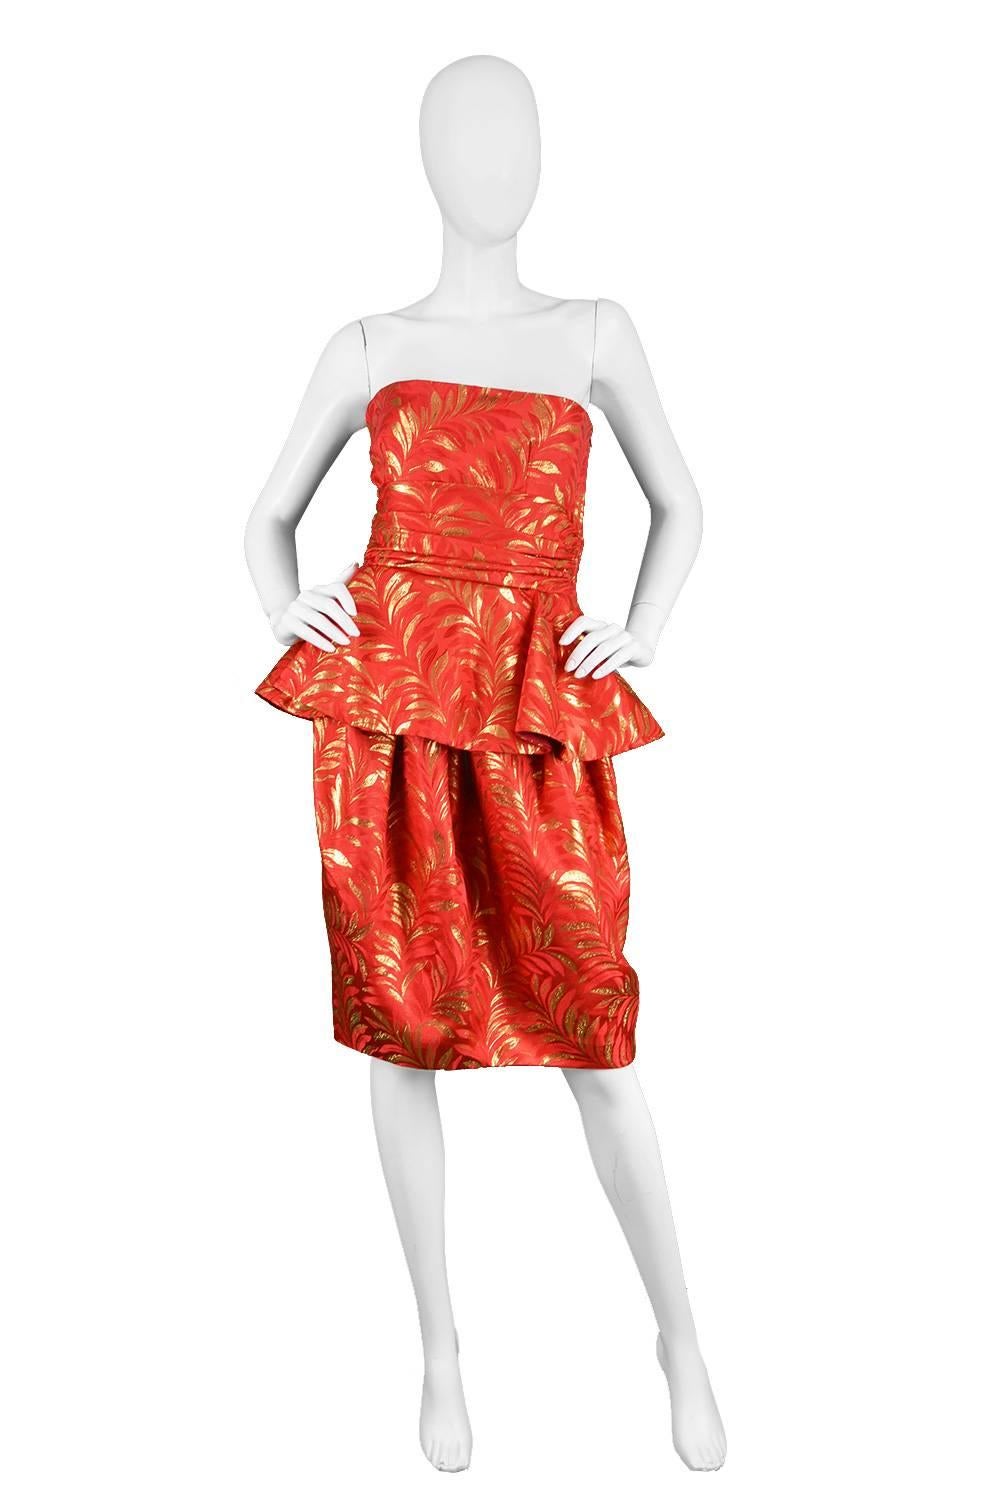 Lanvin Red & Gold Silk Brocade Peplum Vintage Cocktail Evening Dress, 1980s

Estimated Size: UK 6/ US 2/ EU 34. Please check measurements. 
Bust - 32” / 81cm
Waist - 25” / 63cm
Hips - Free
Length (Bust to Hem) - 32” / 81cm

Condition: Excellent